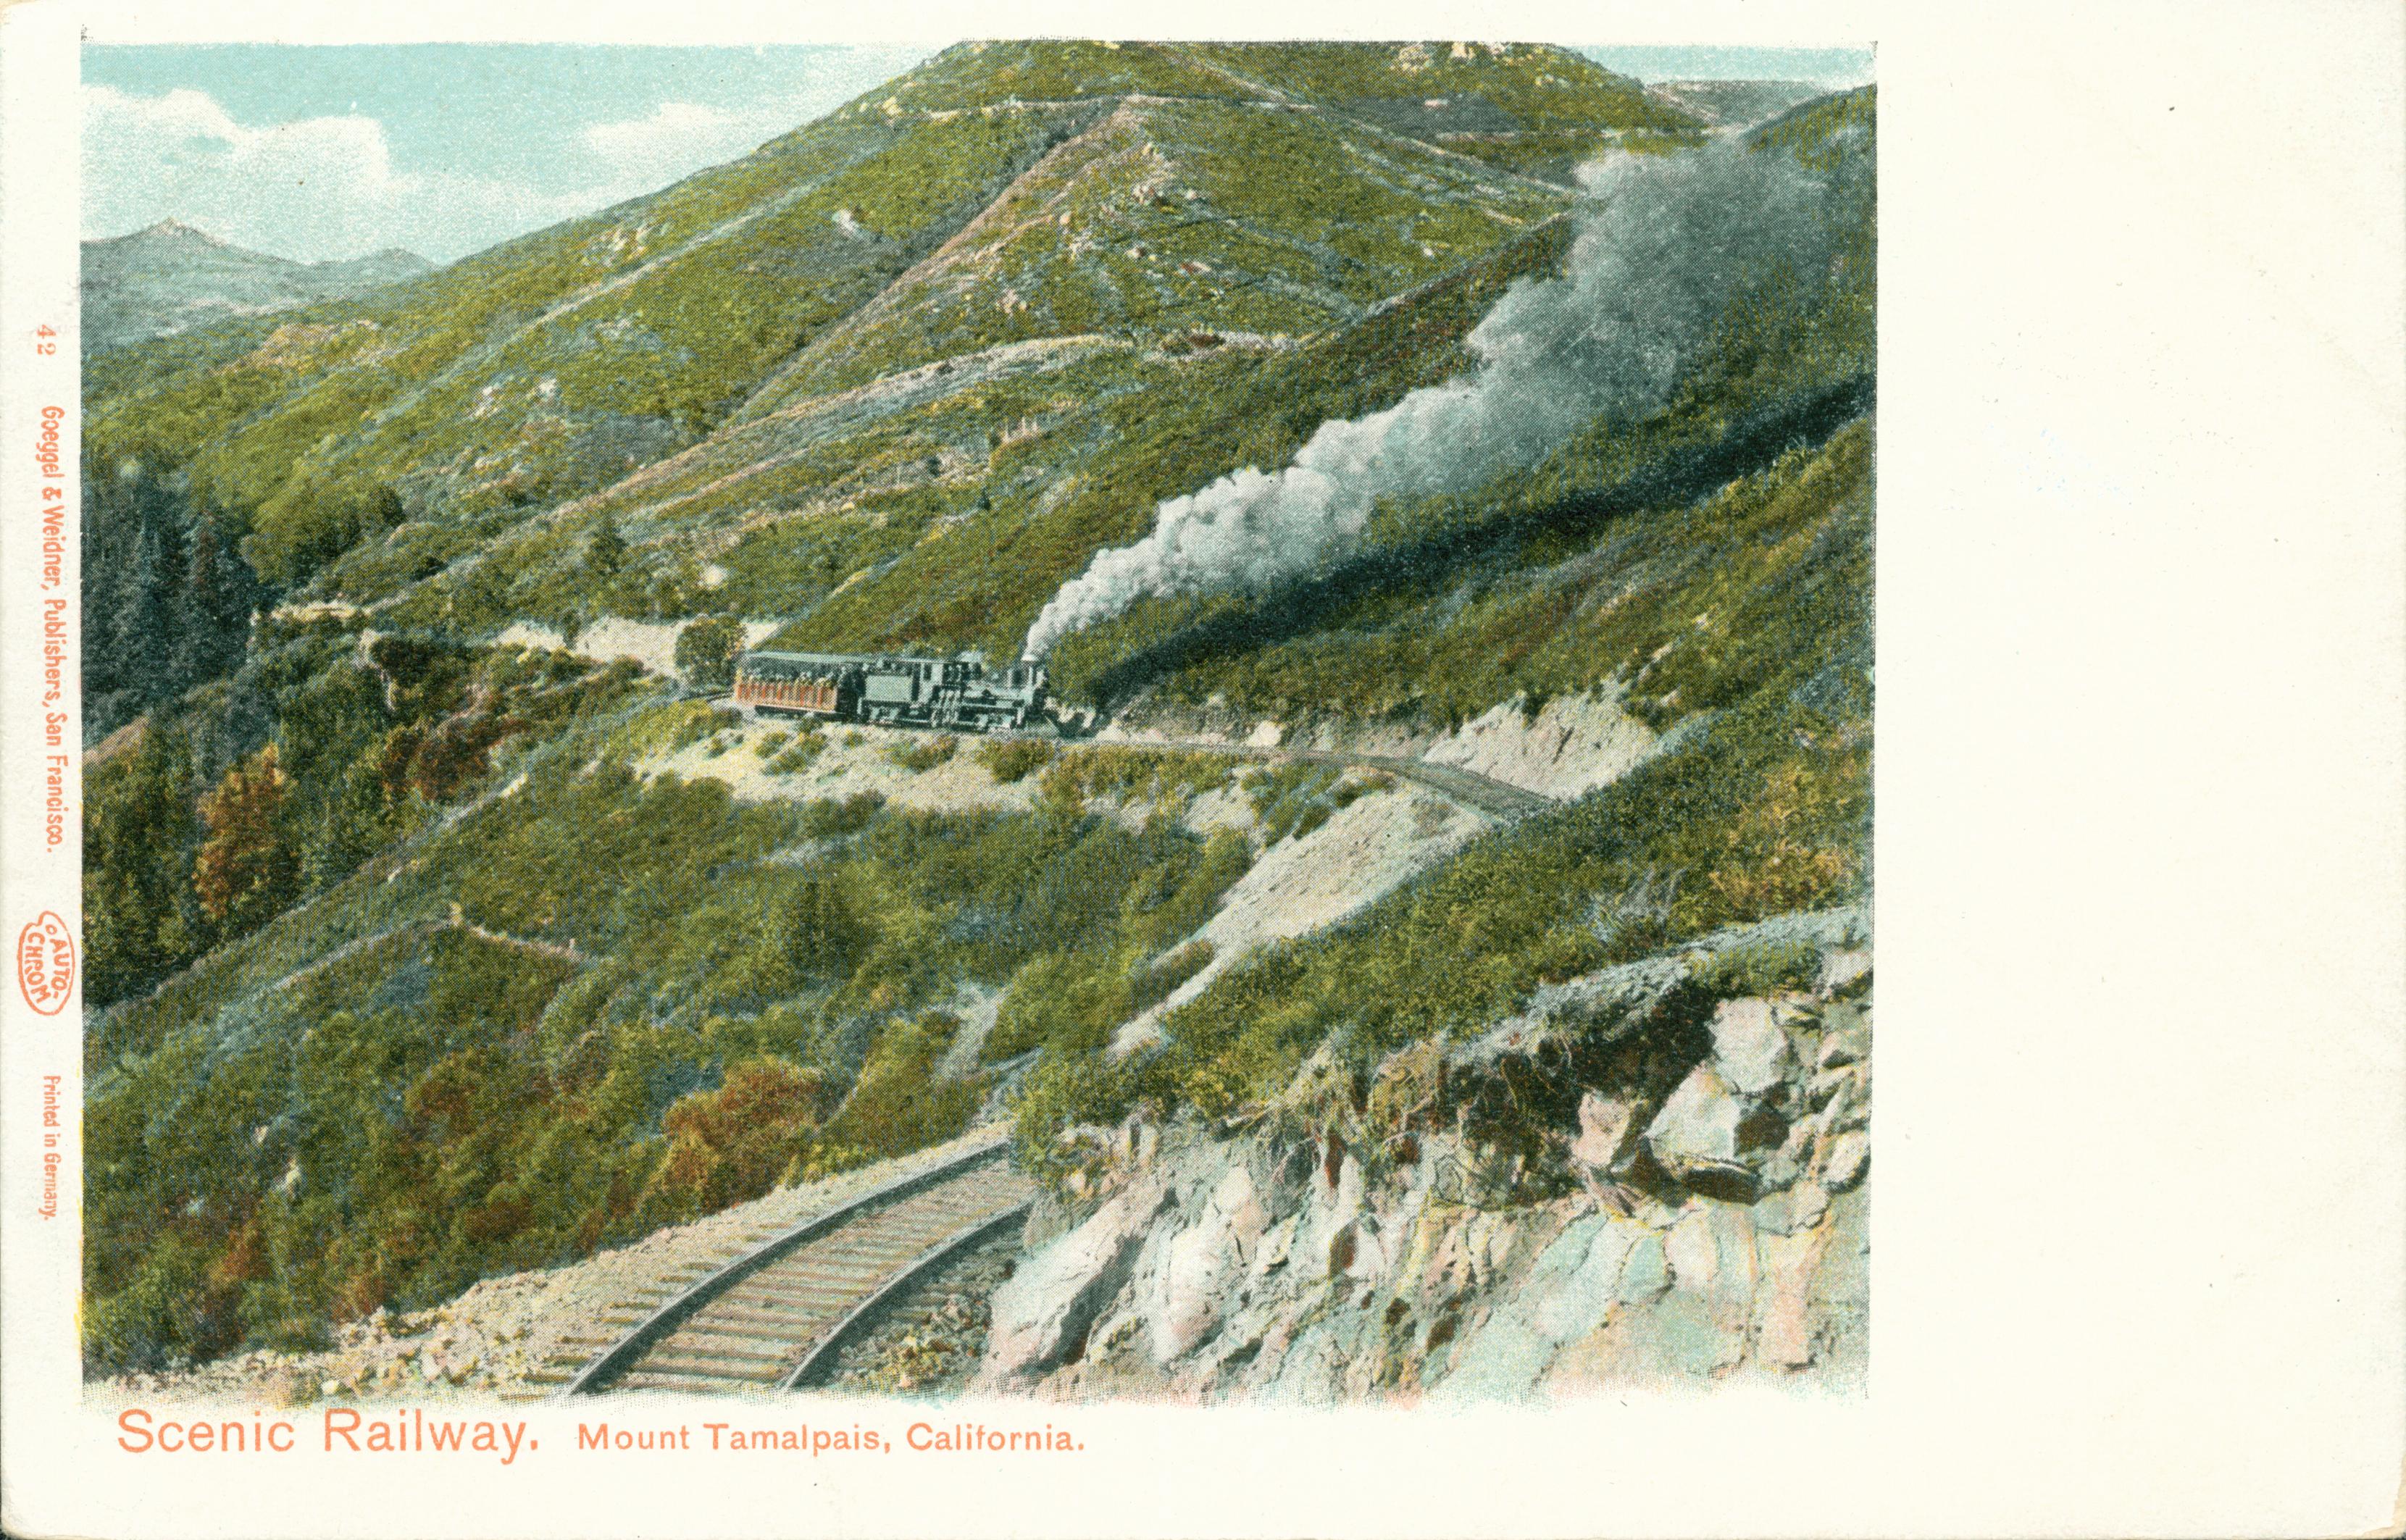 Train traveling along hillside, lots of steam, hillsides, mountain views, passenger car